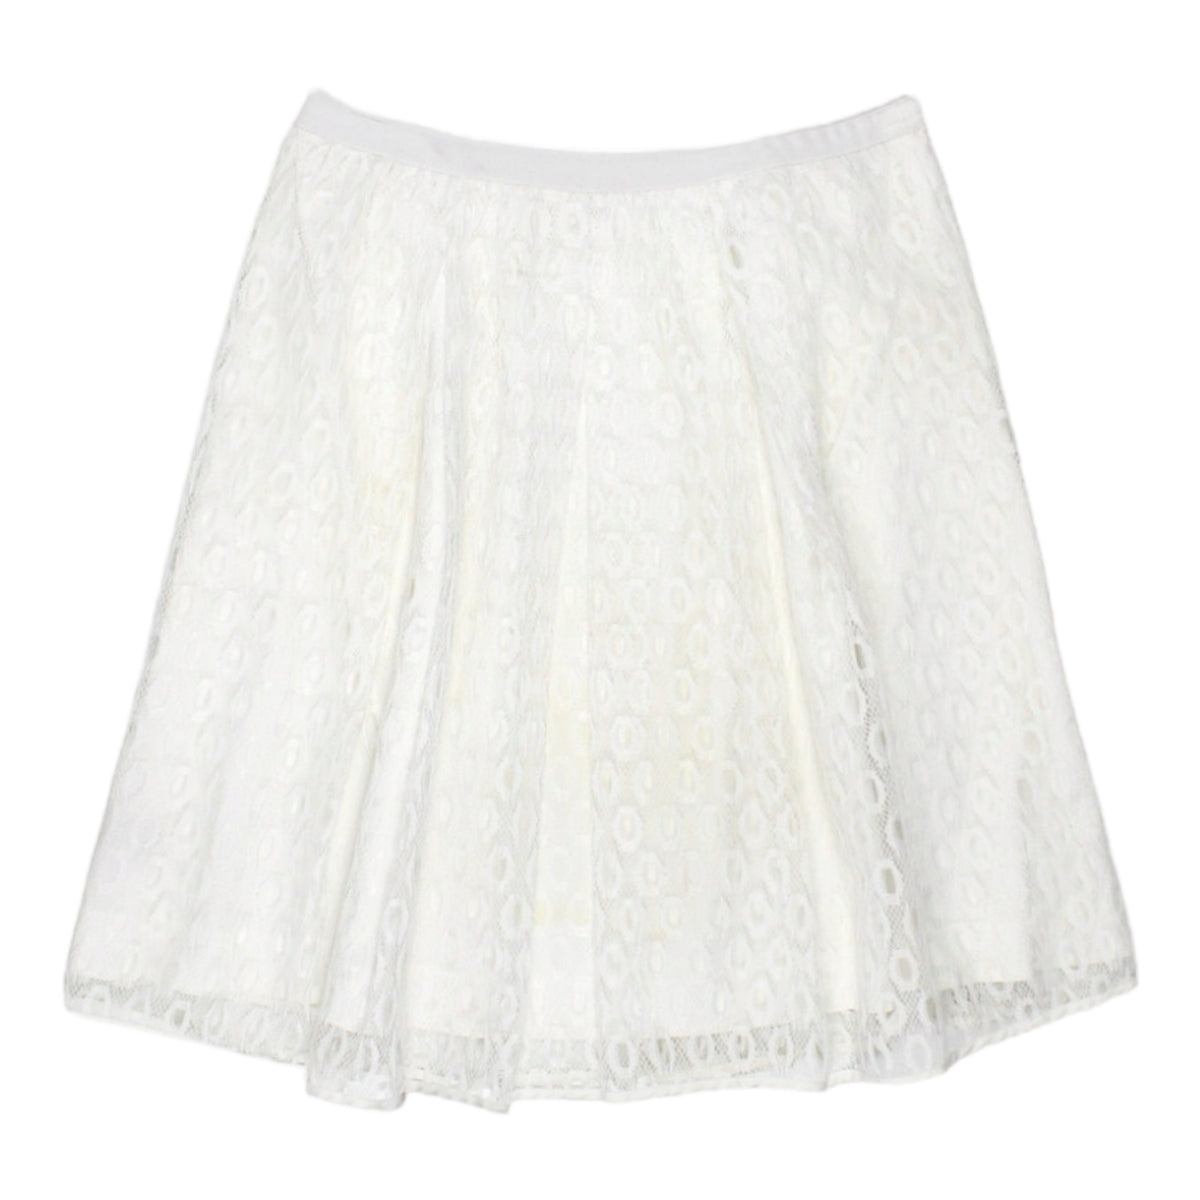 Maeve White Lace Skirt